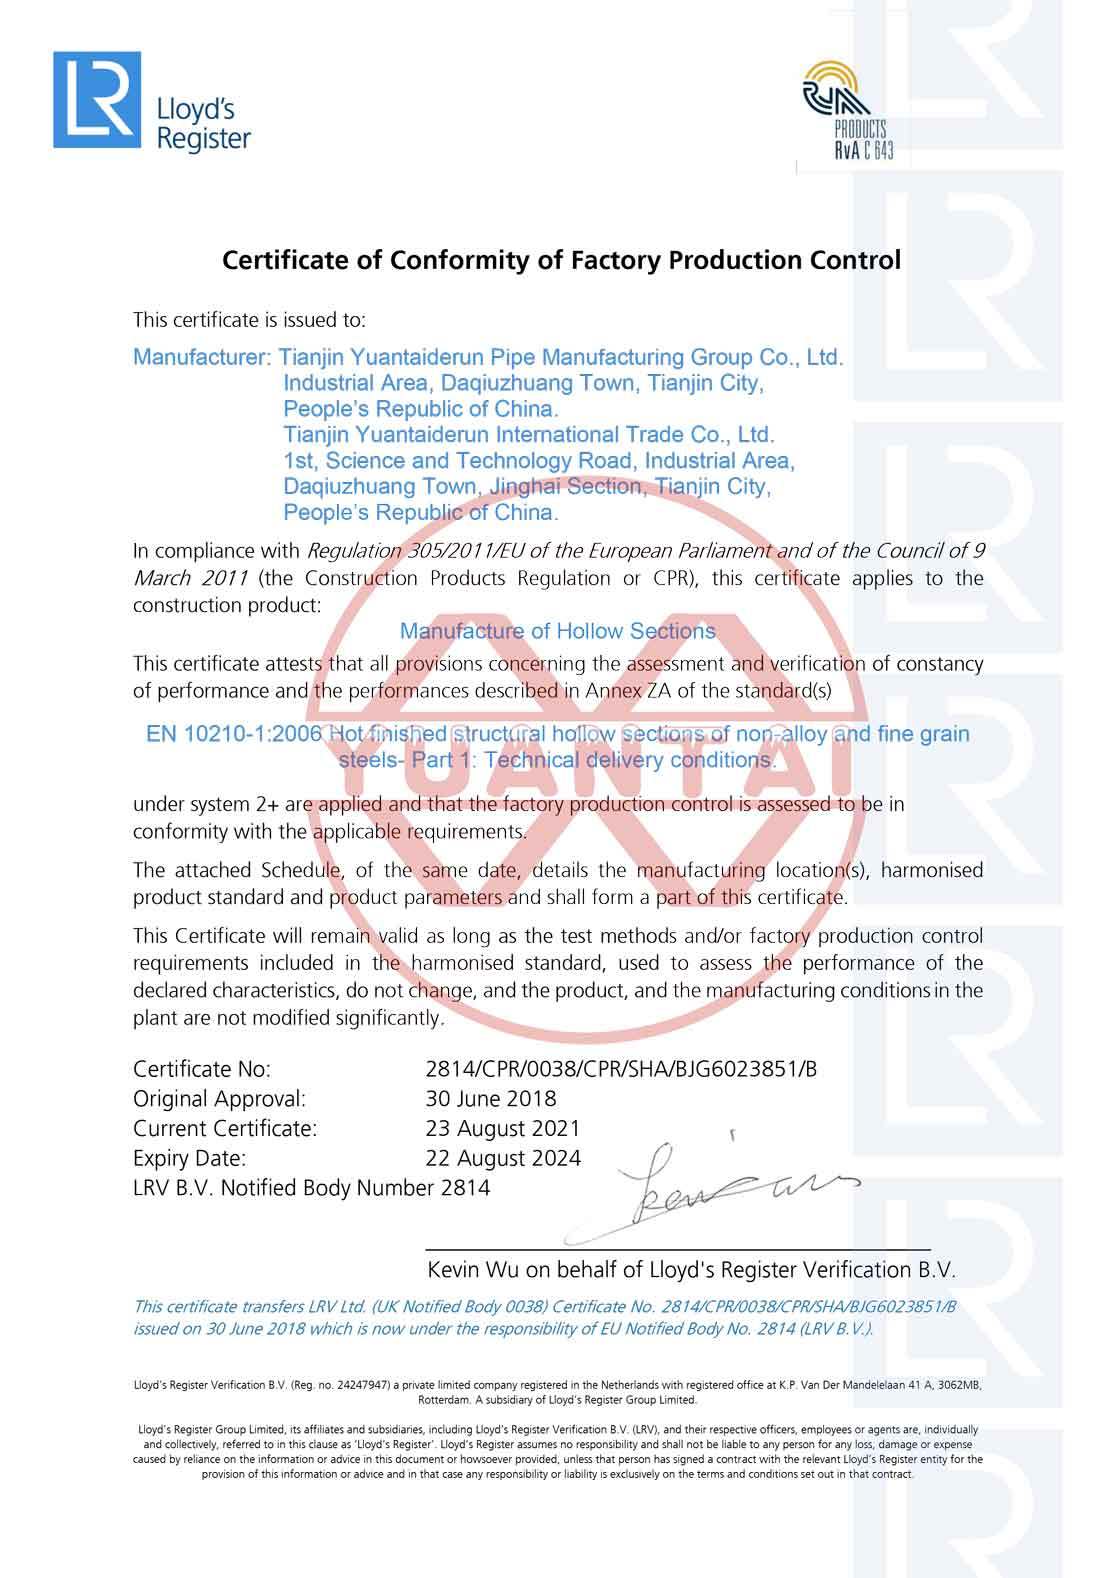 Certificate of Conformity of Factory Production Control EN10210-1:2006